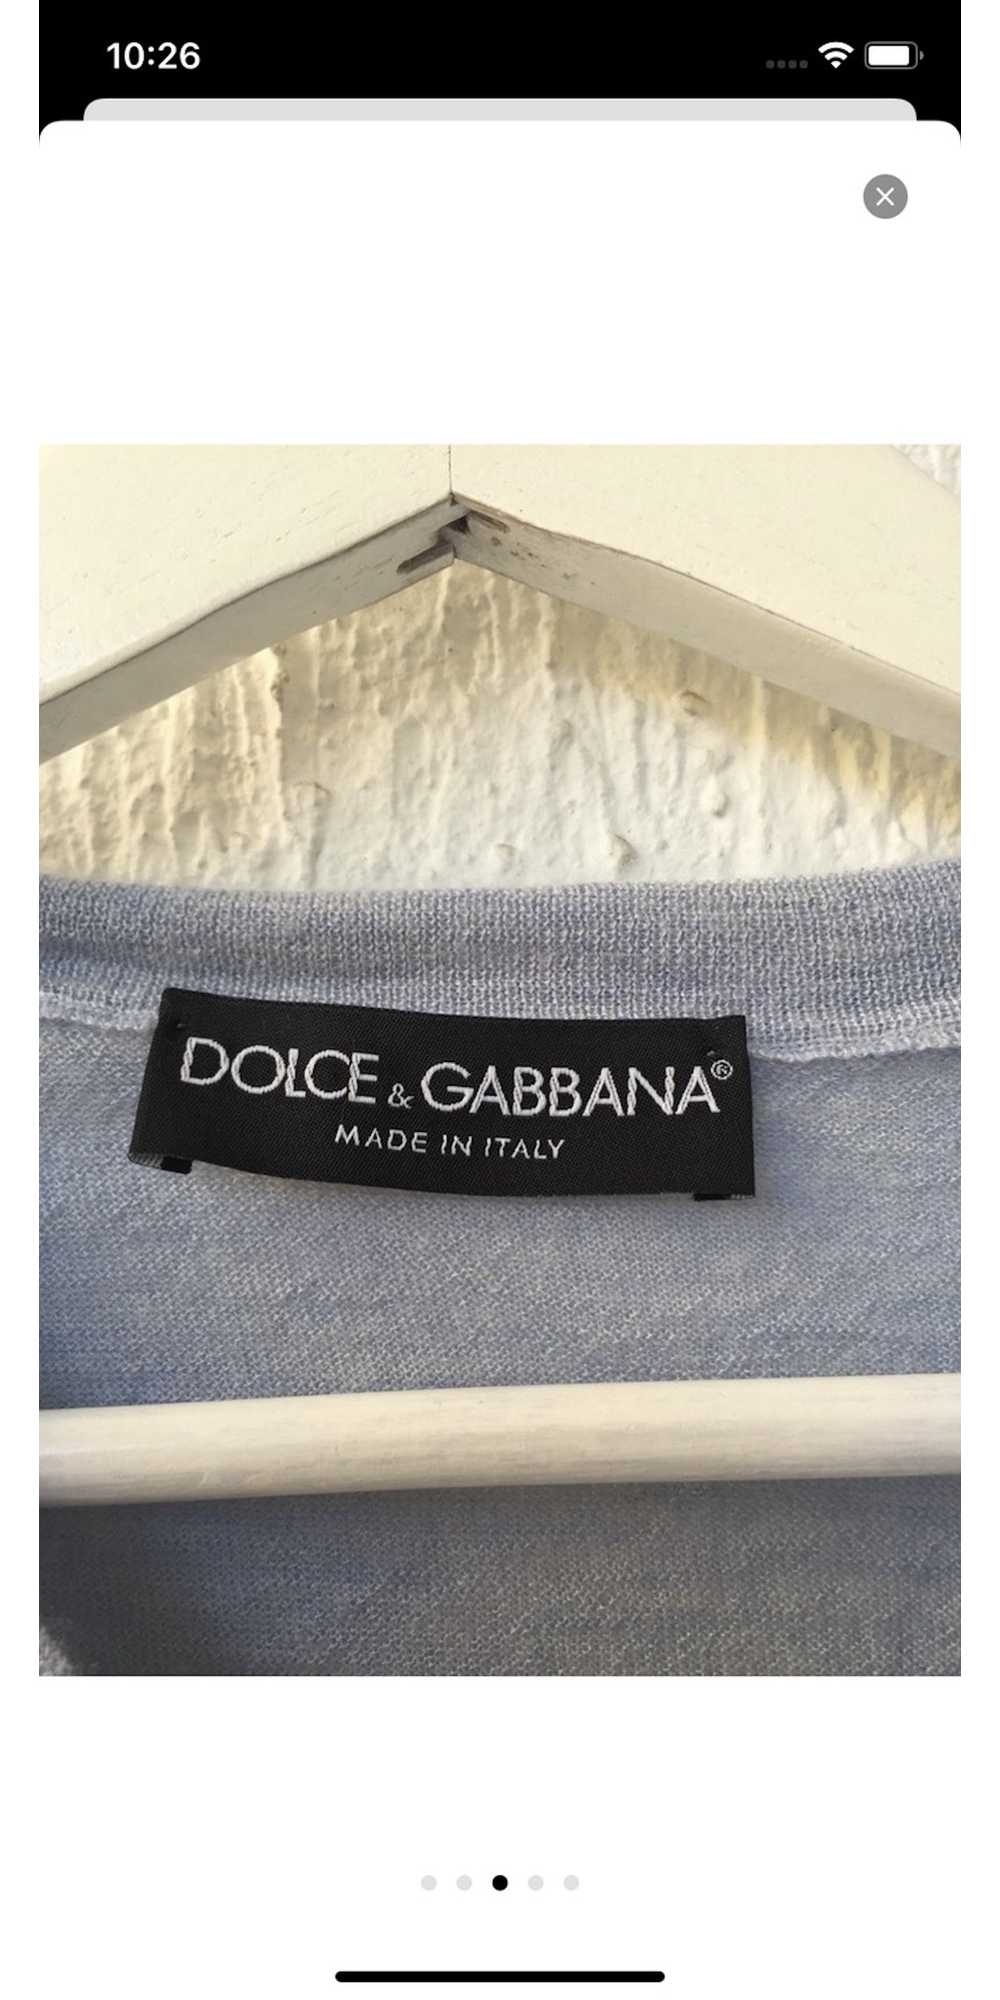 Dolce & Gabbana Light Blue Cashmere Sweater - image 2